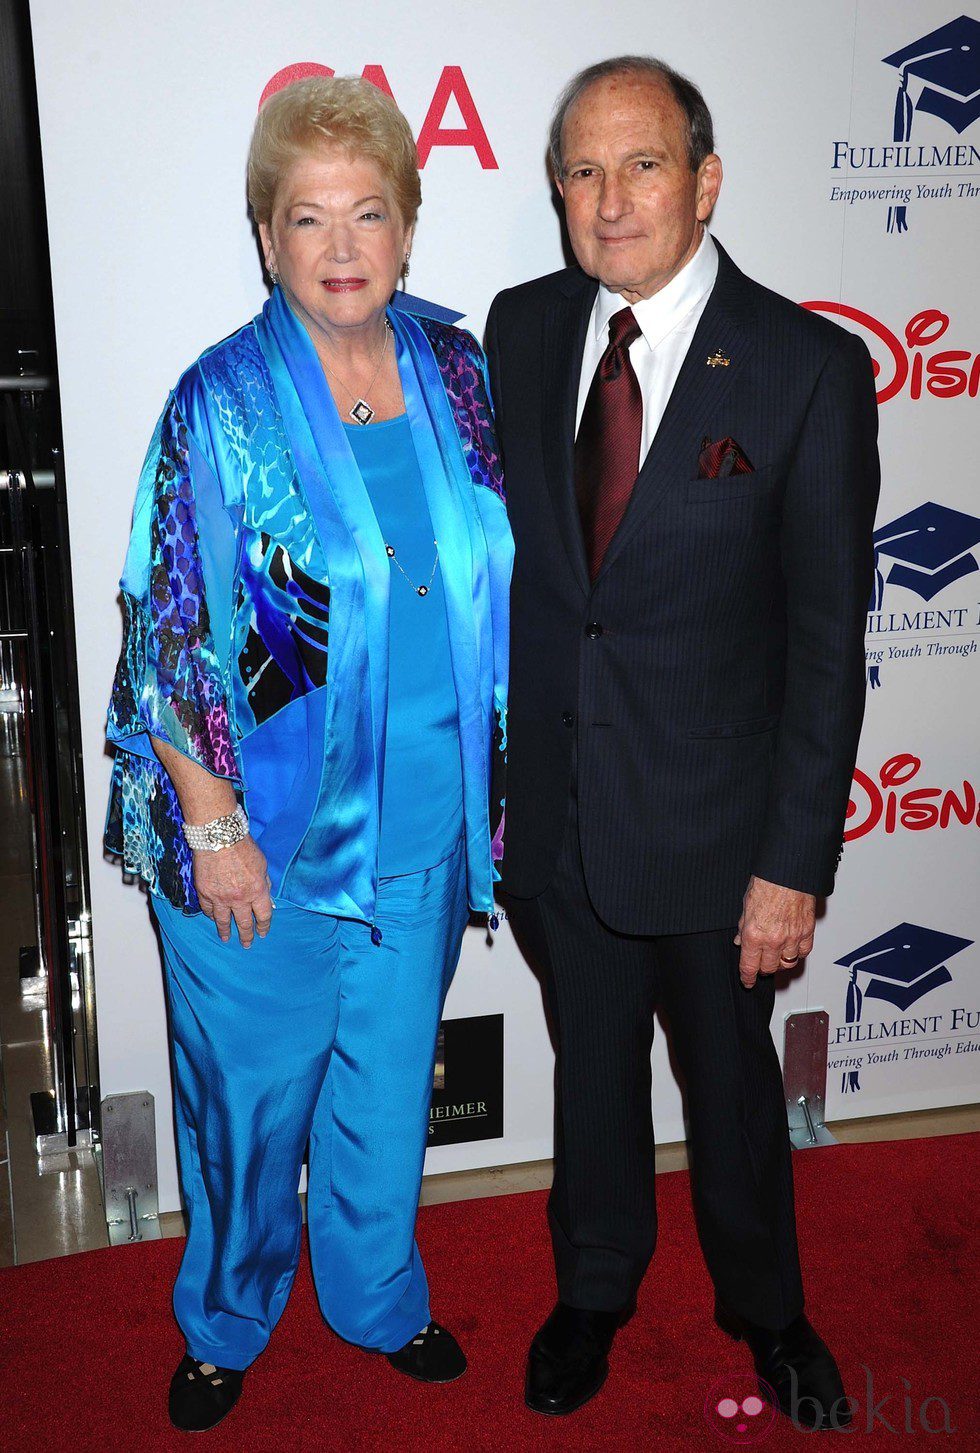 Gary Gitnick y Cherna Gitnick en una gala benéfica en Los Ángeles